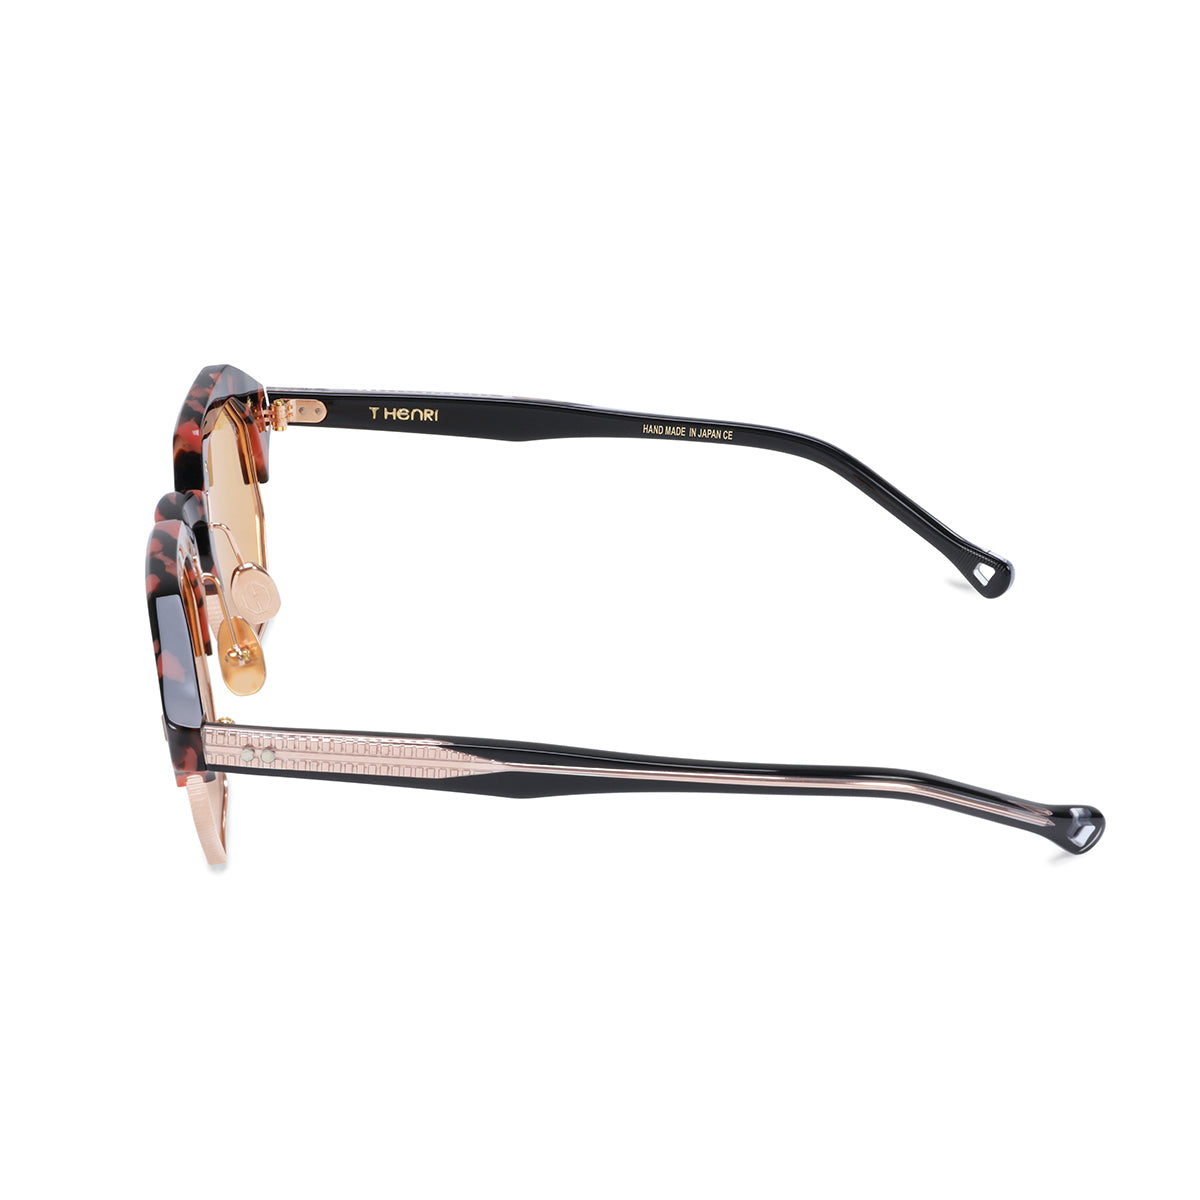 Buy T Henri Gullwing Mizner | Sunglasses Frame | Authorized Dealer Adair Eyewear